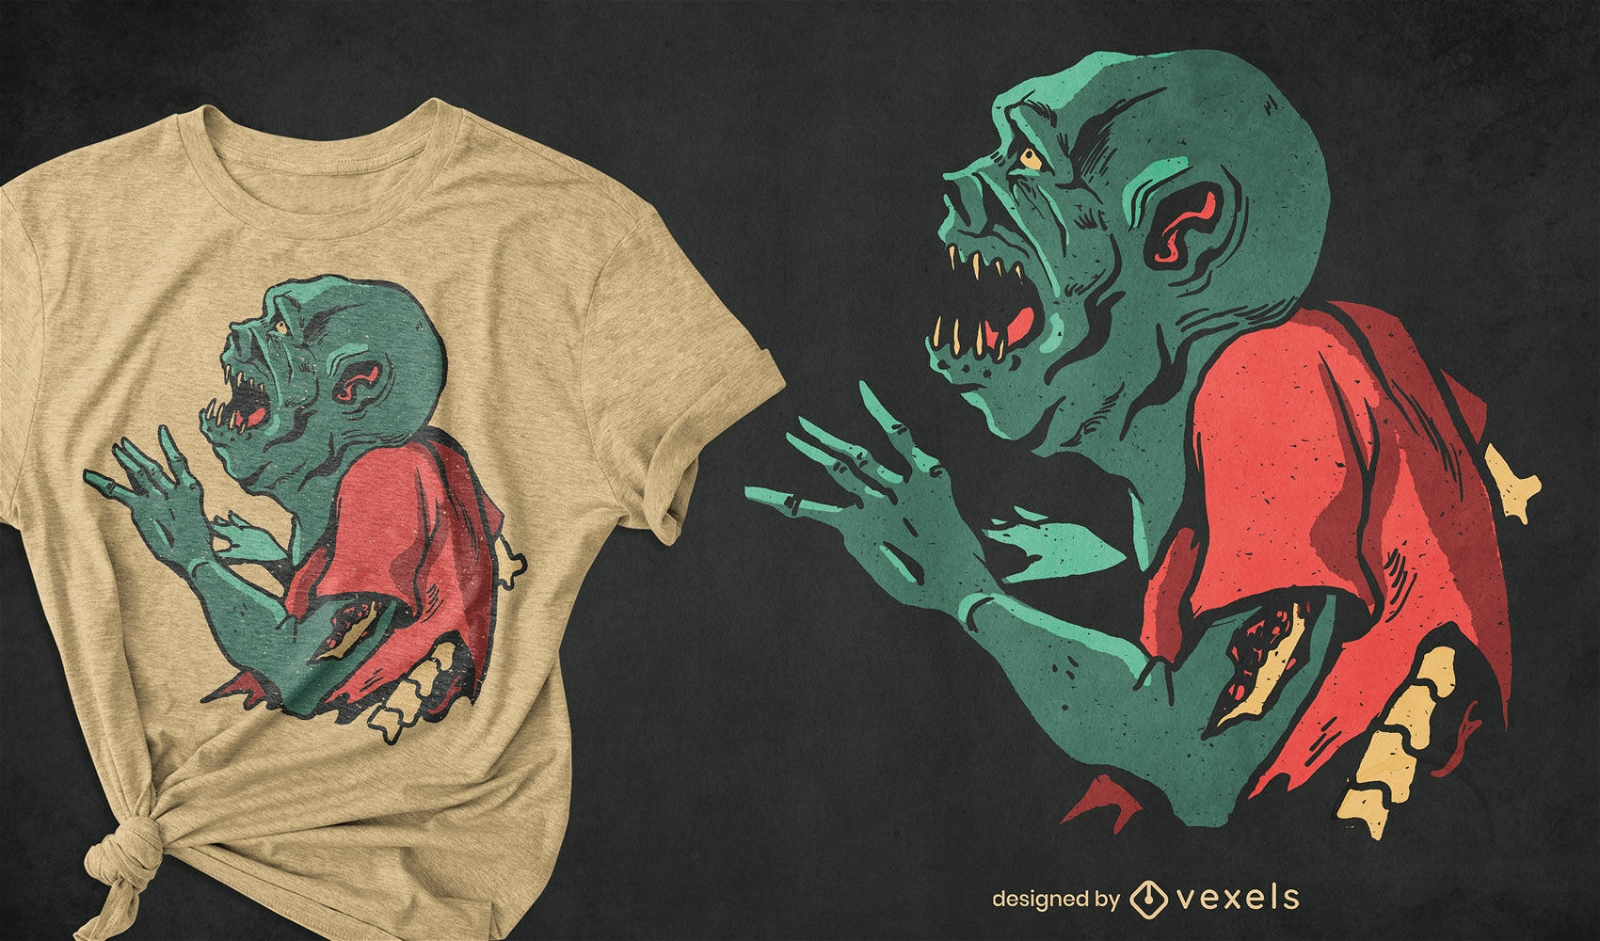 Gruseliges T-Shirt-Design mit gr?nem Zombie-Monster